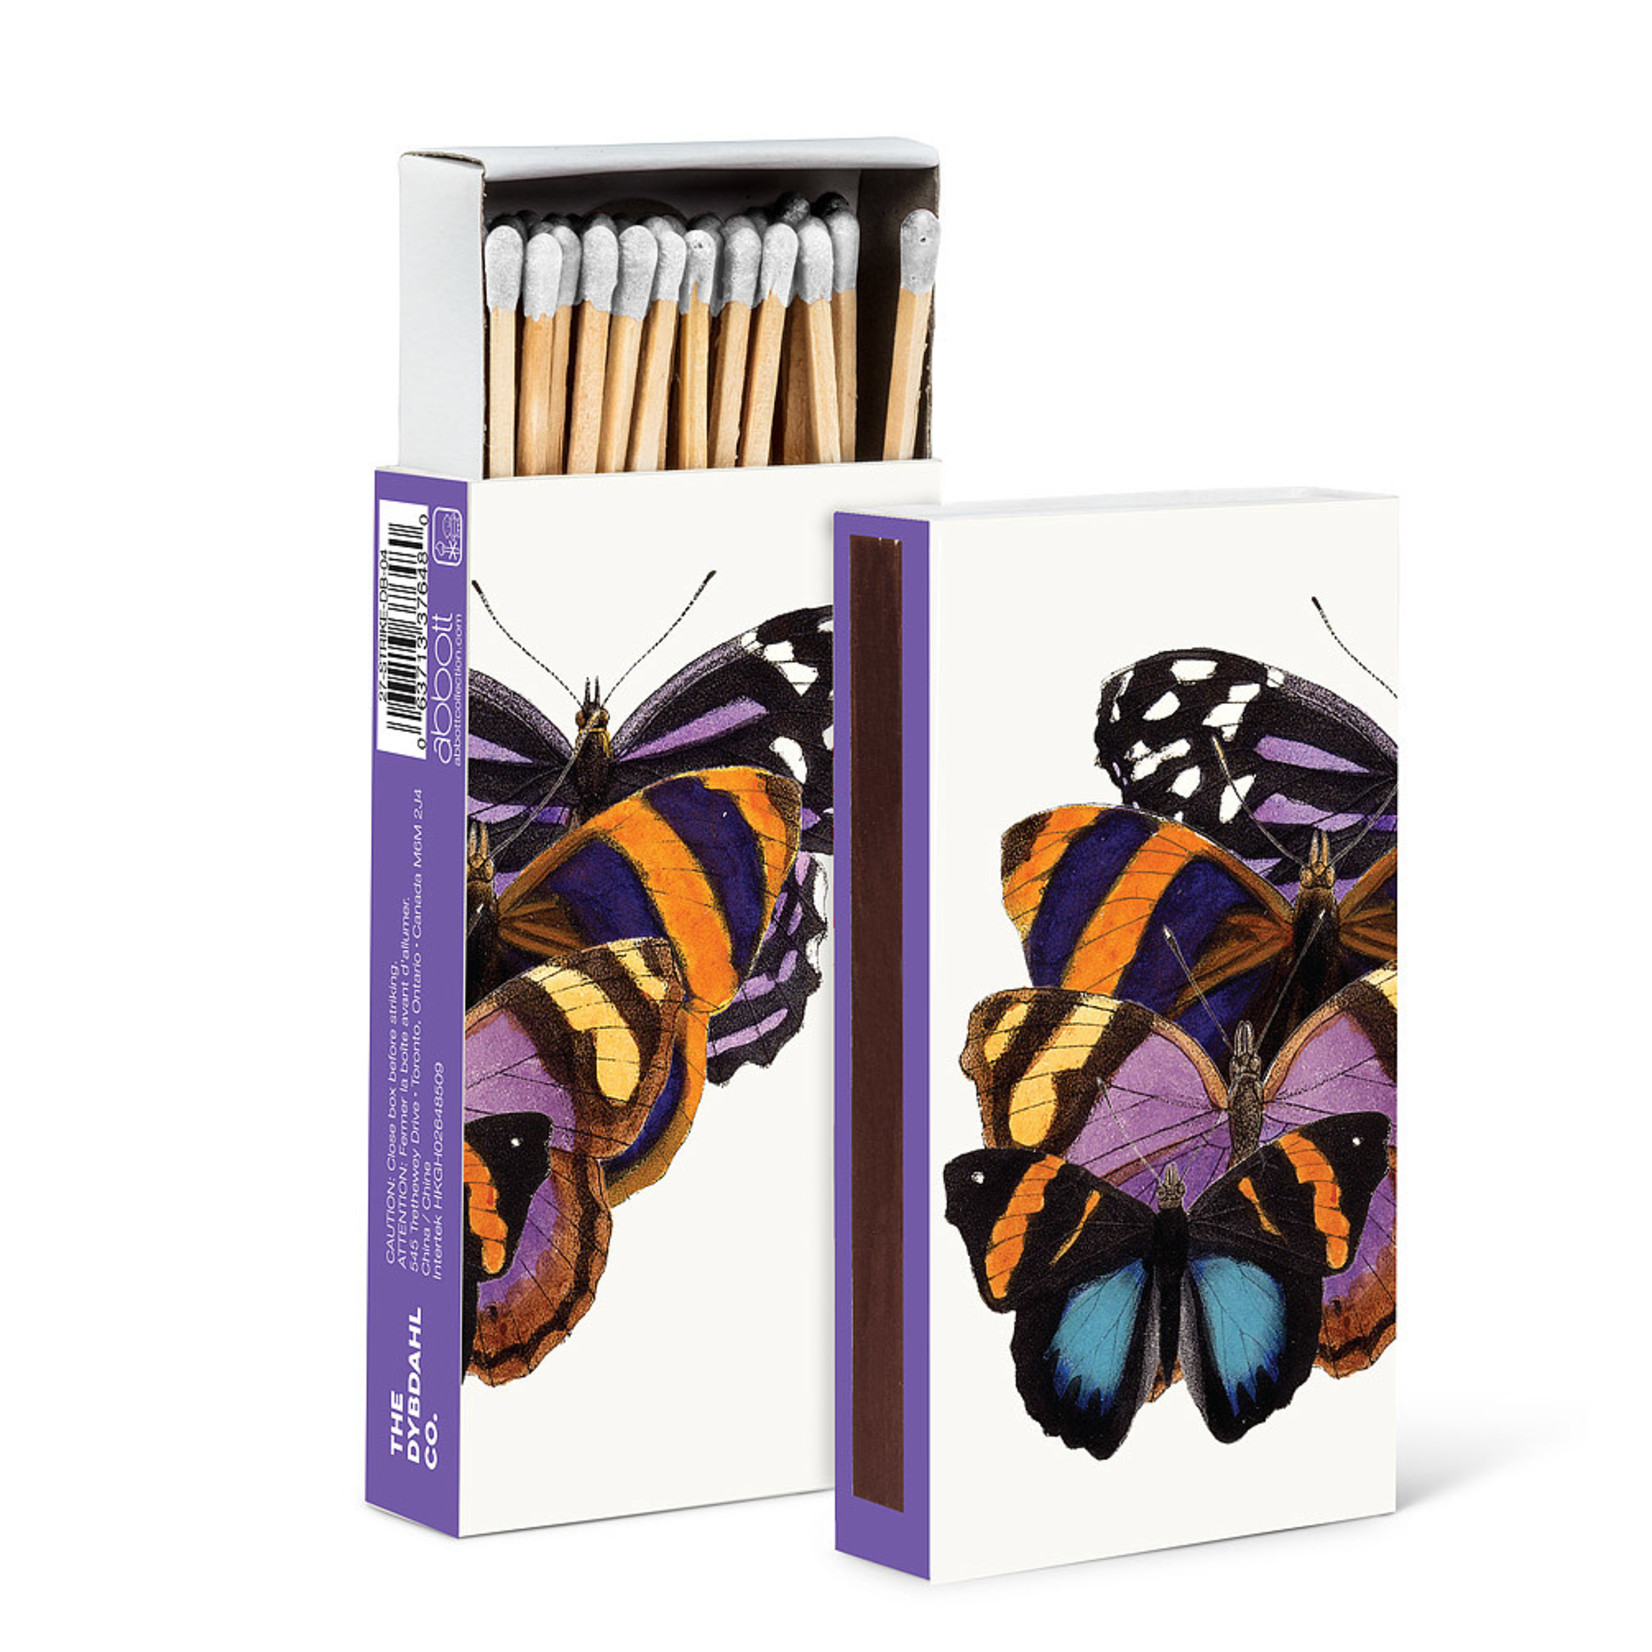 A - Butterfly Study Matches - 45 Sticks